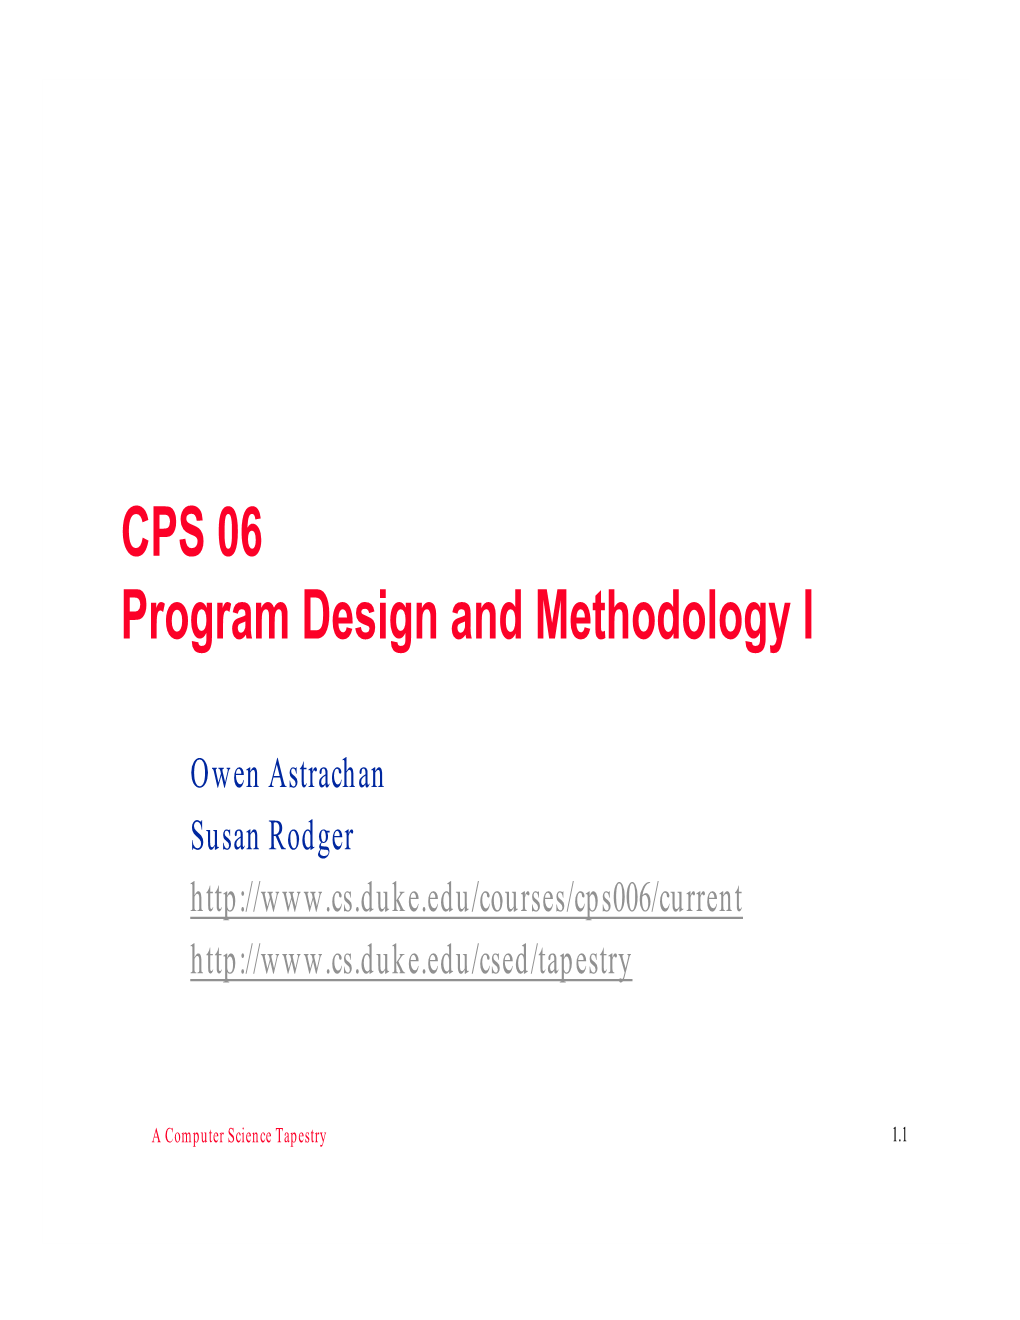 CPS 06 Program Design and Methodology I